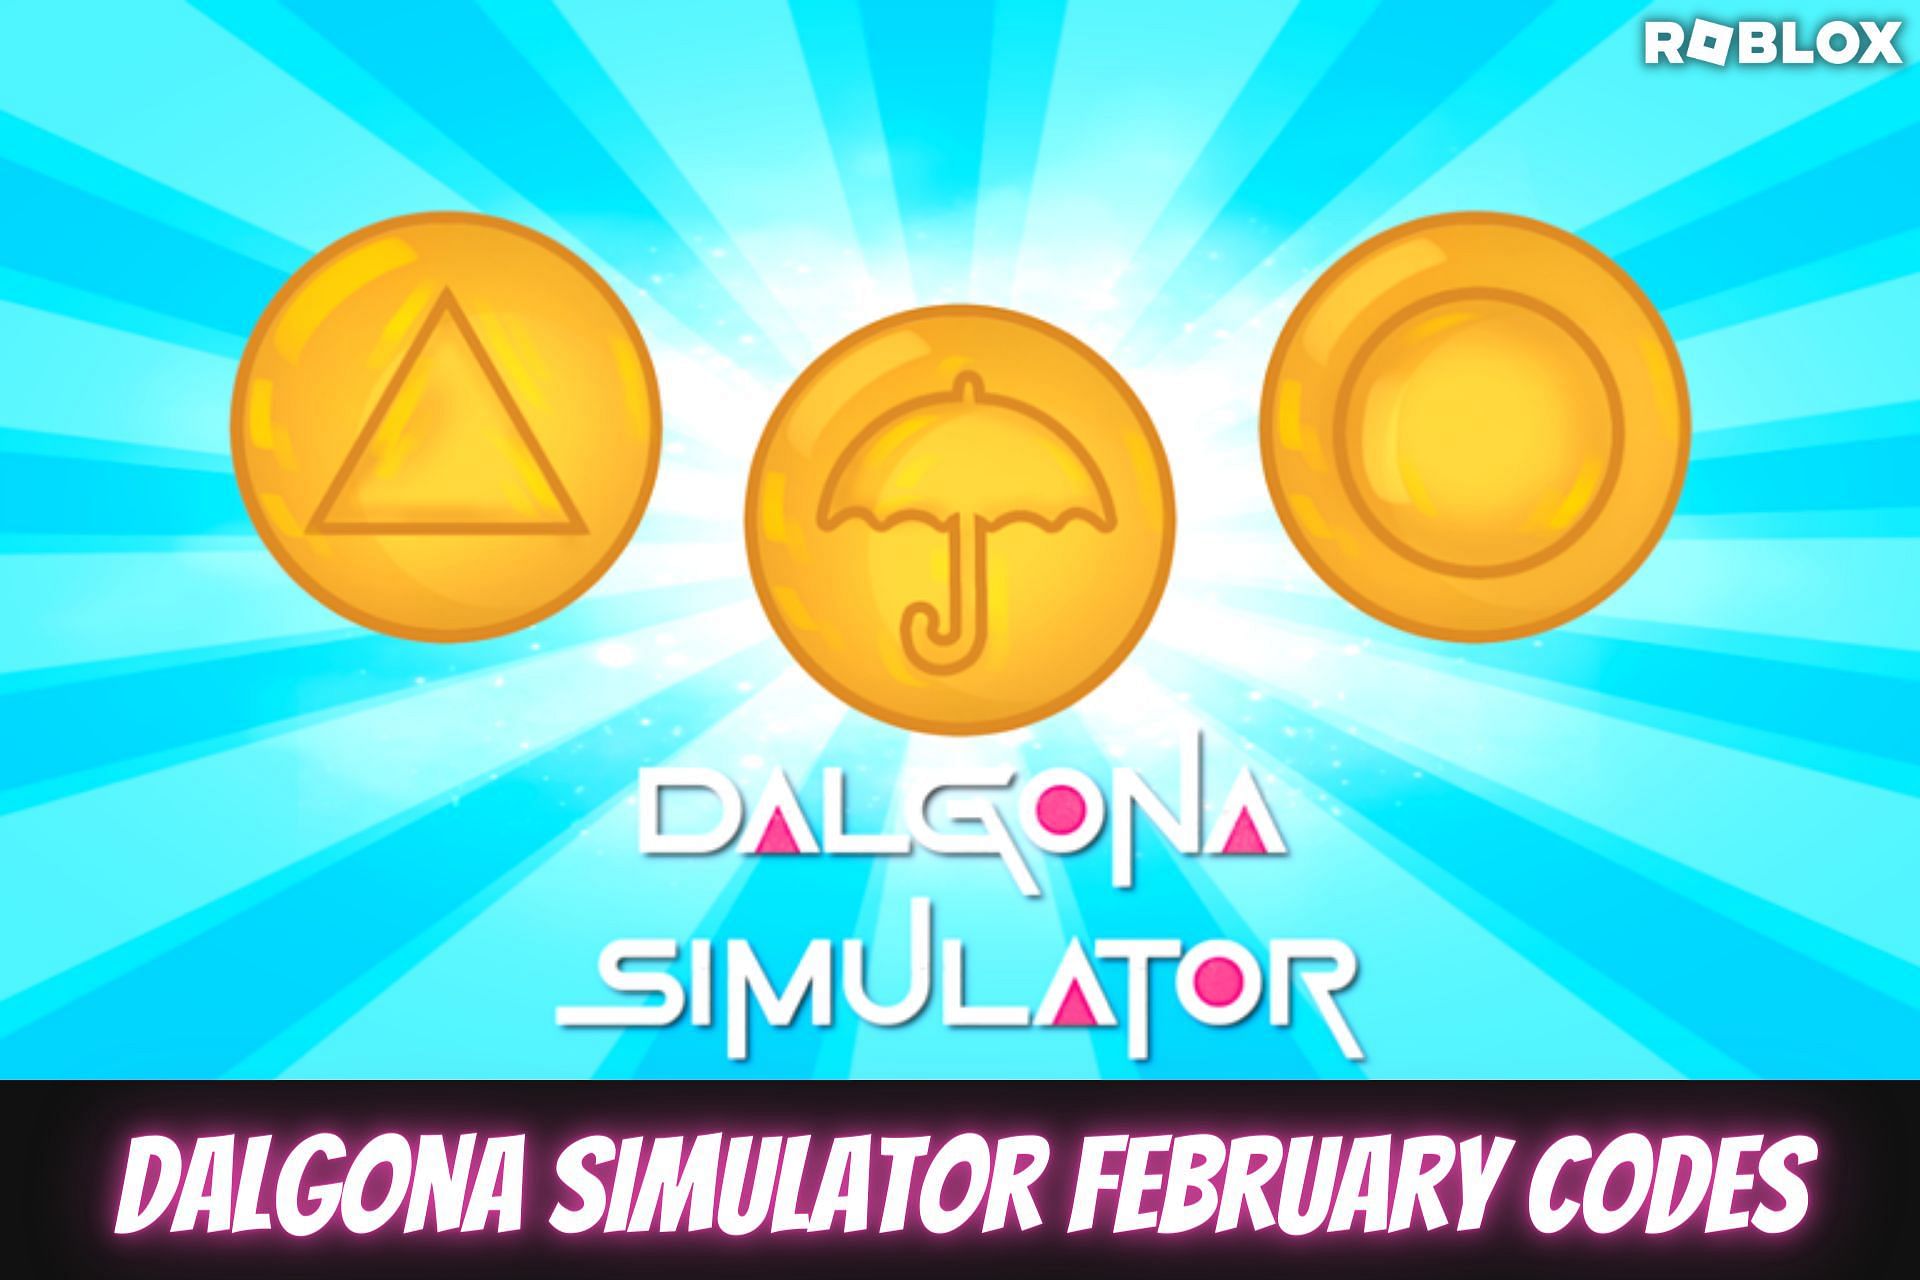 Roblox Dalgona Simulator February codes 